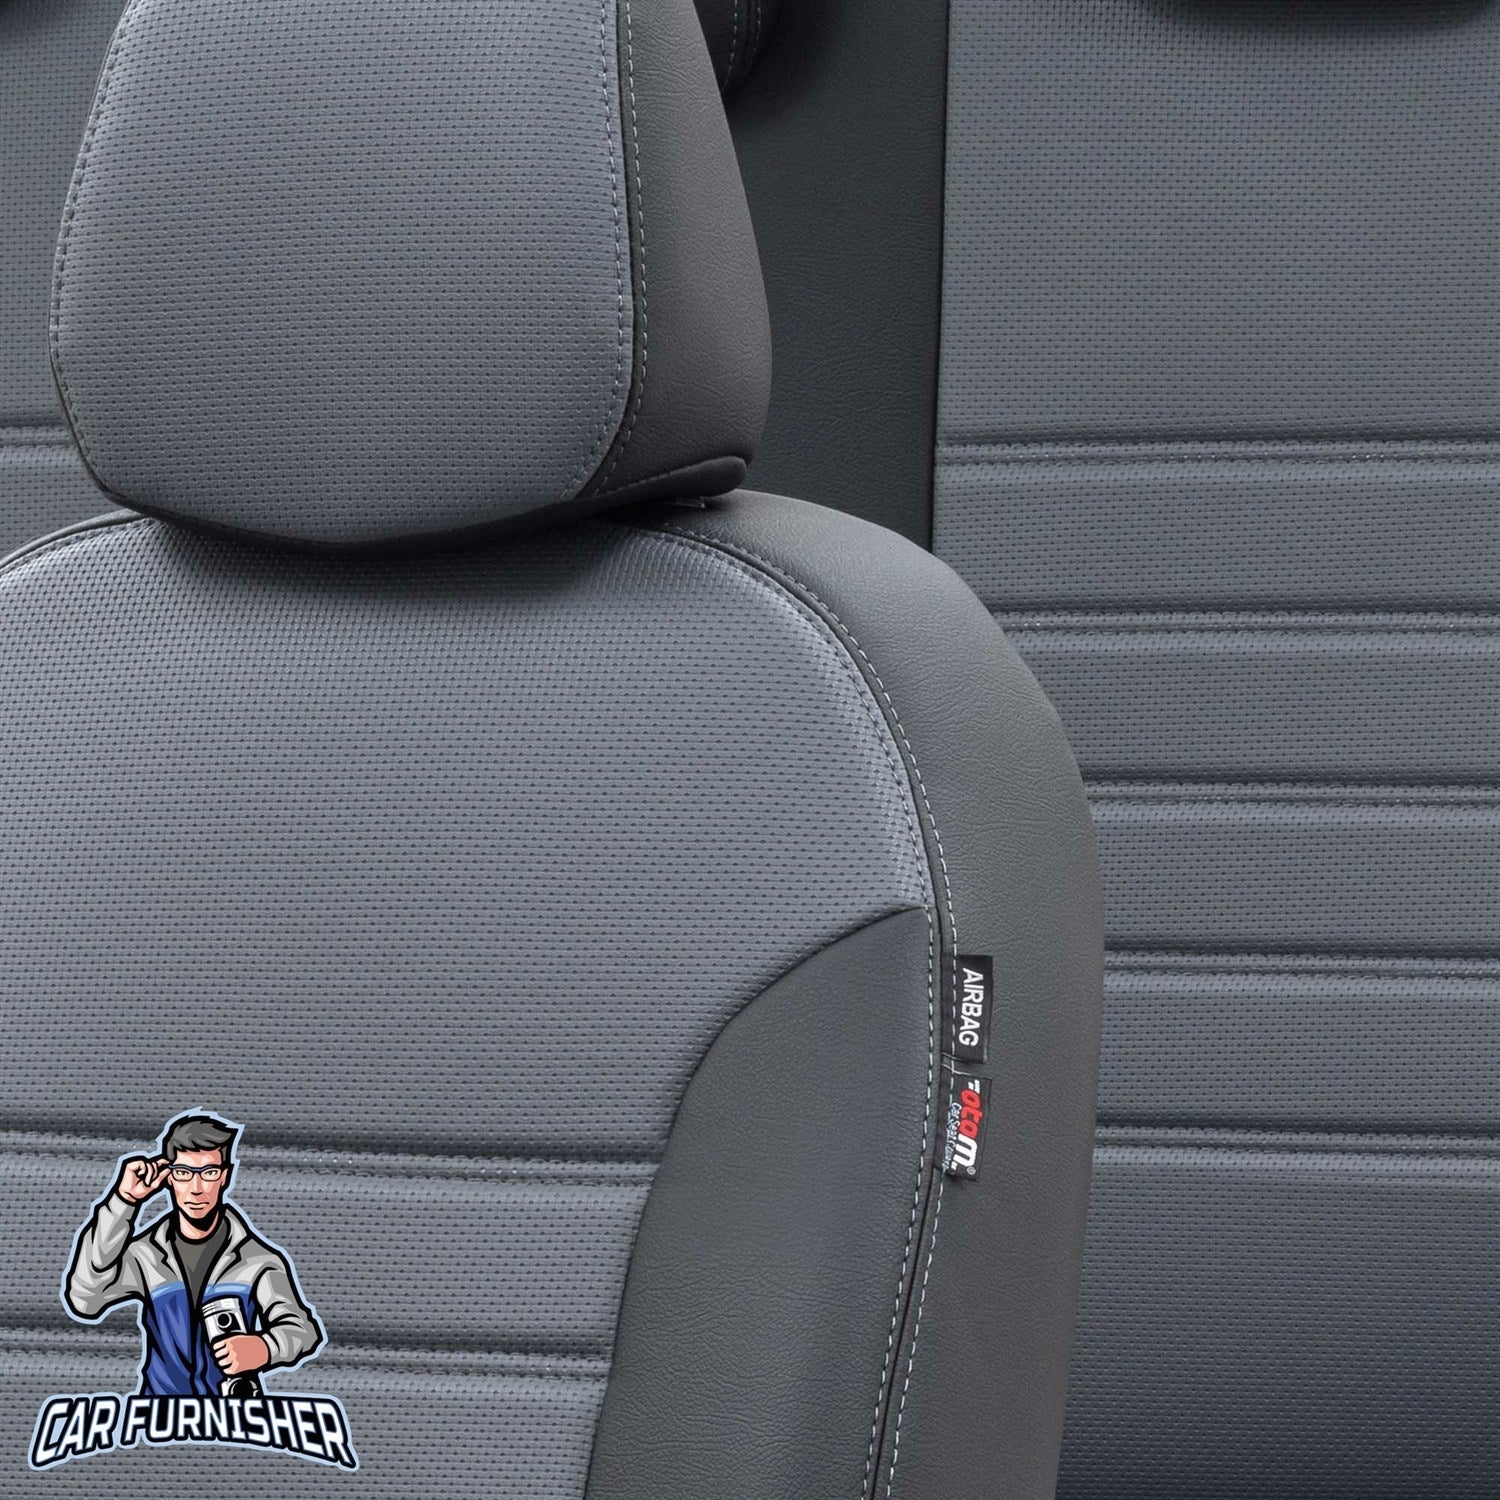 Hyundai Matrix Seat Covers New York Leather Design Smoked Black Leather